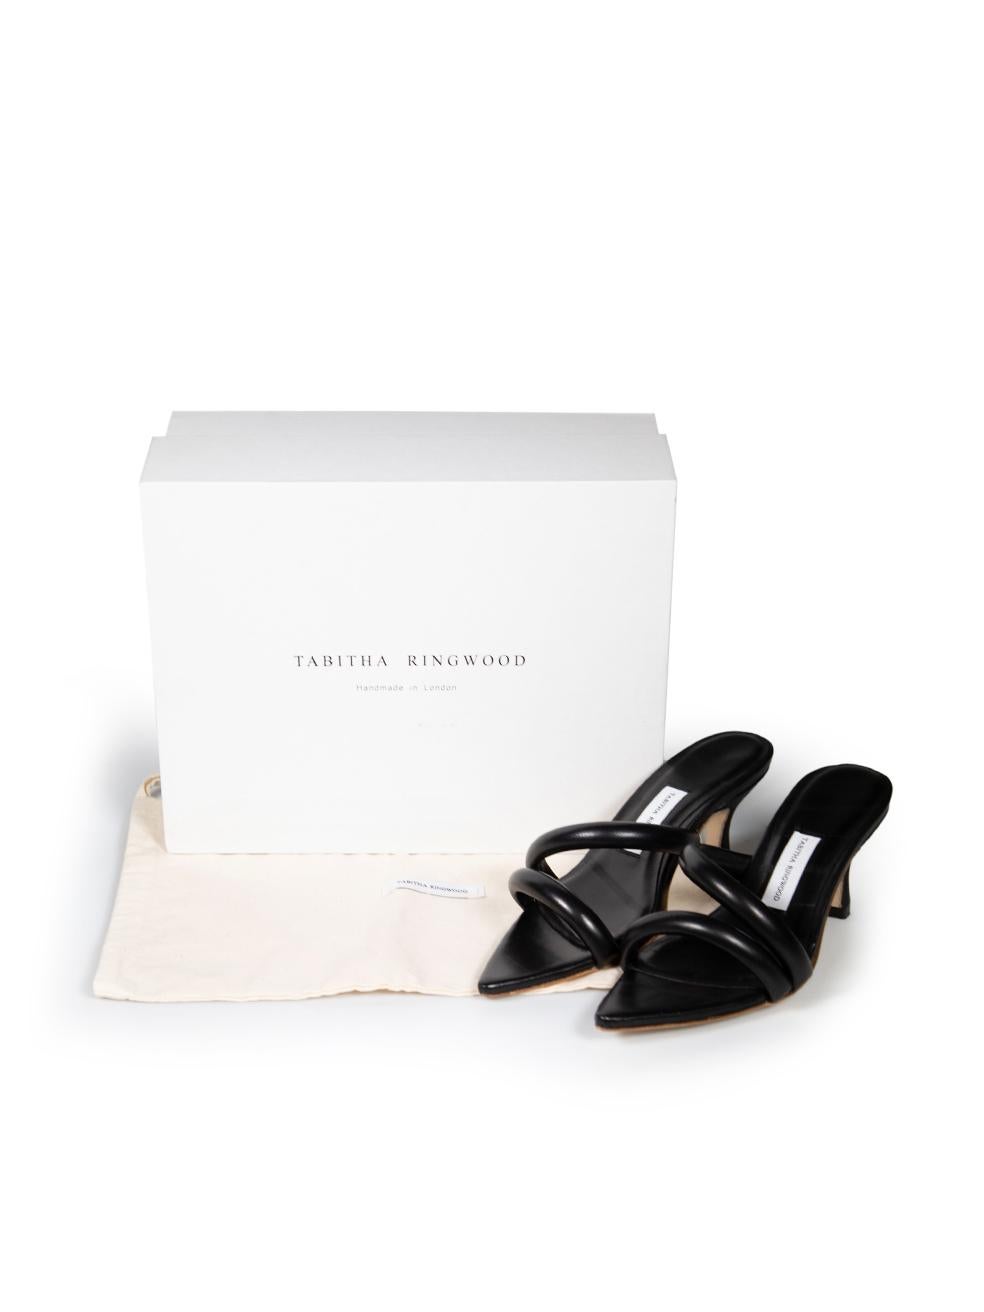 Tabitha Ringwood Black Leather Clove Sandals Size UK 4 For Sale 2